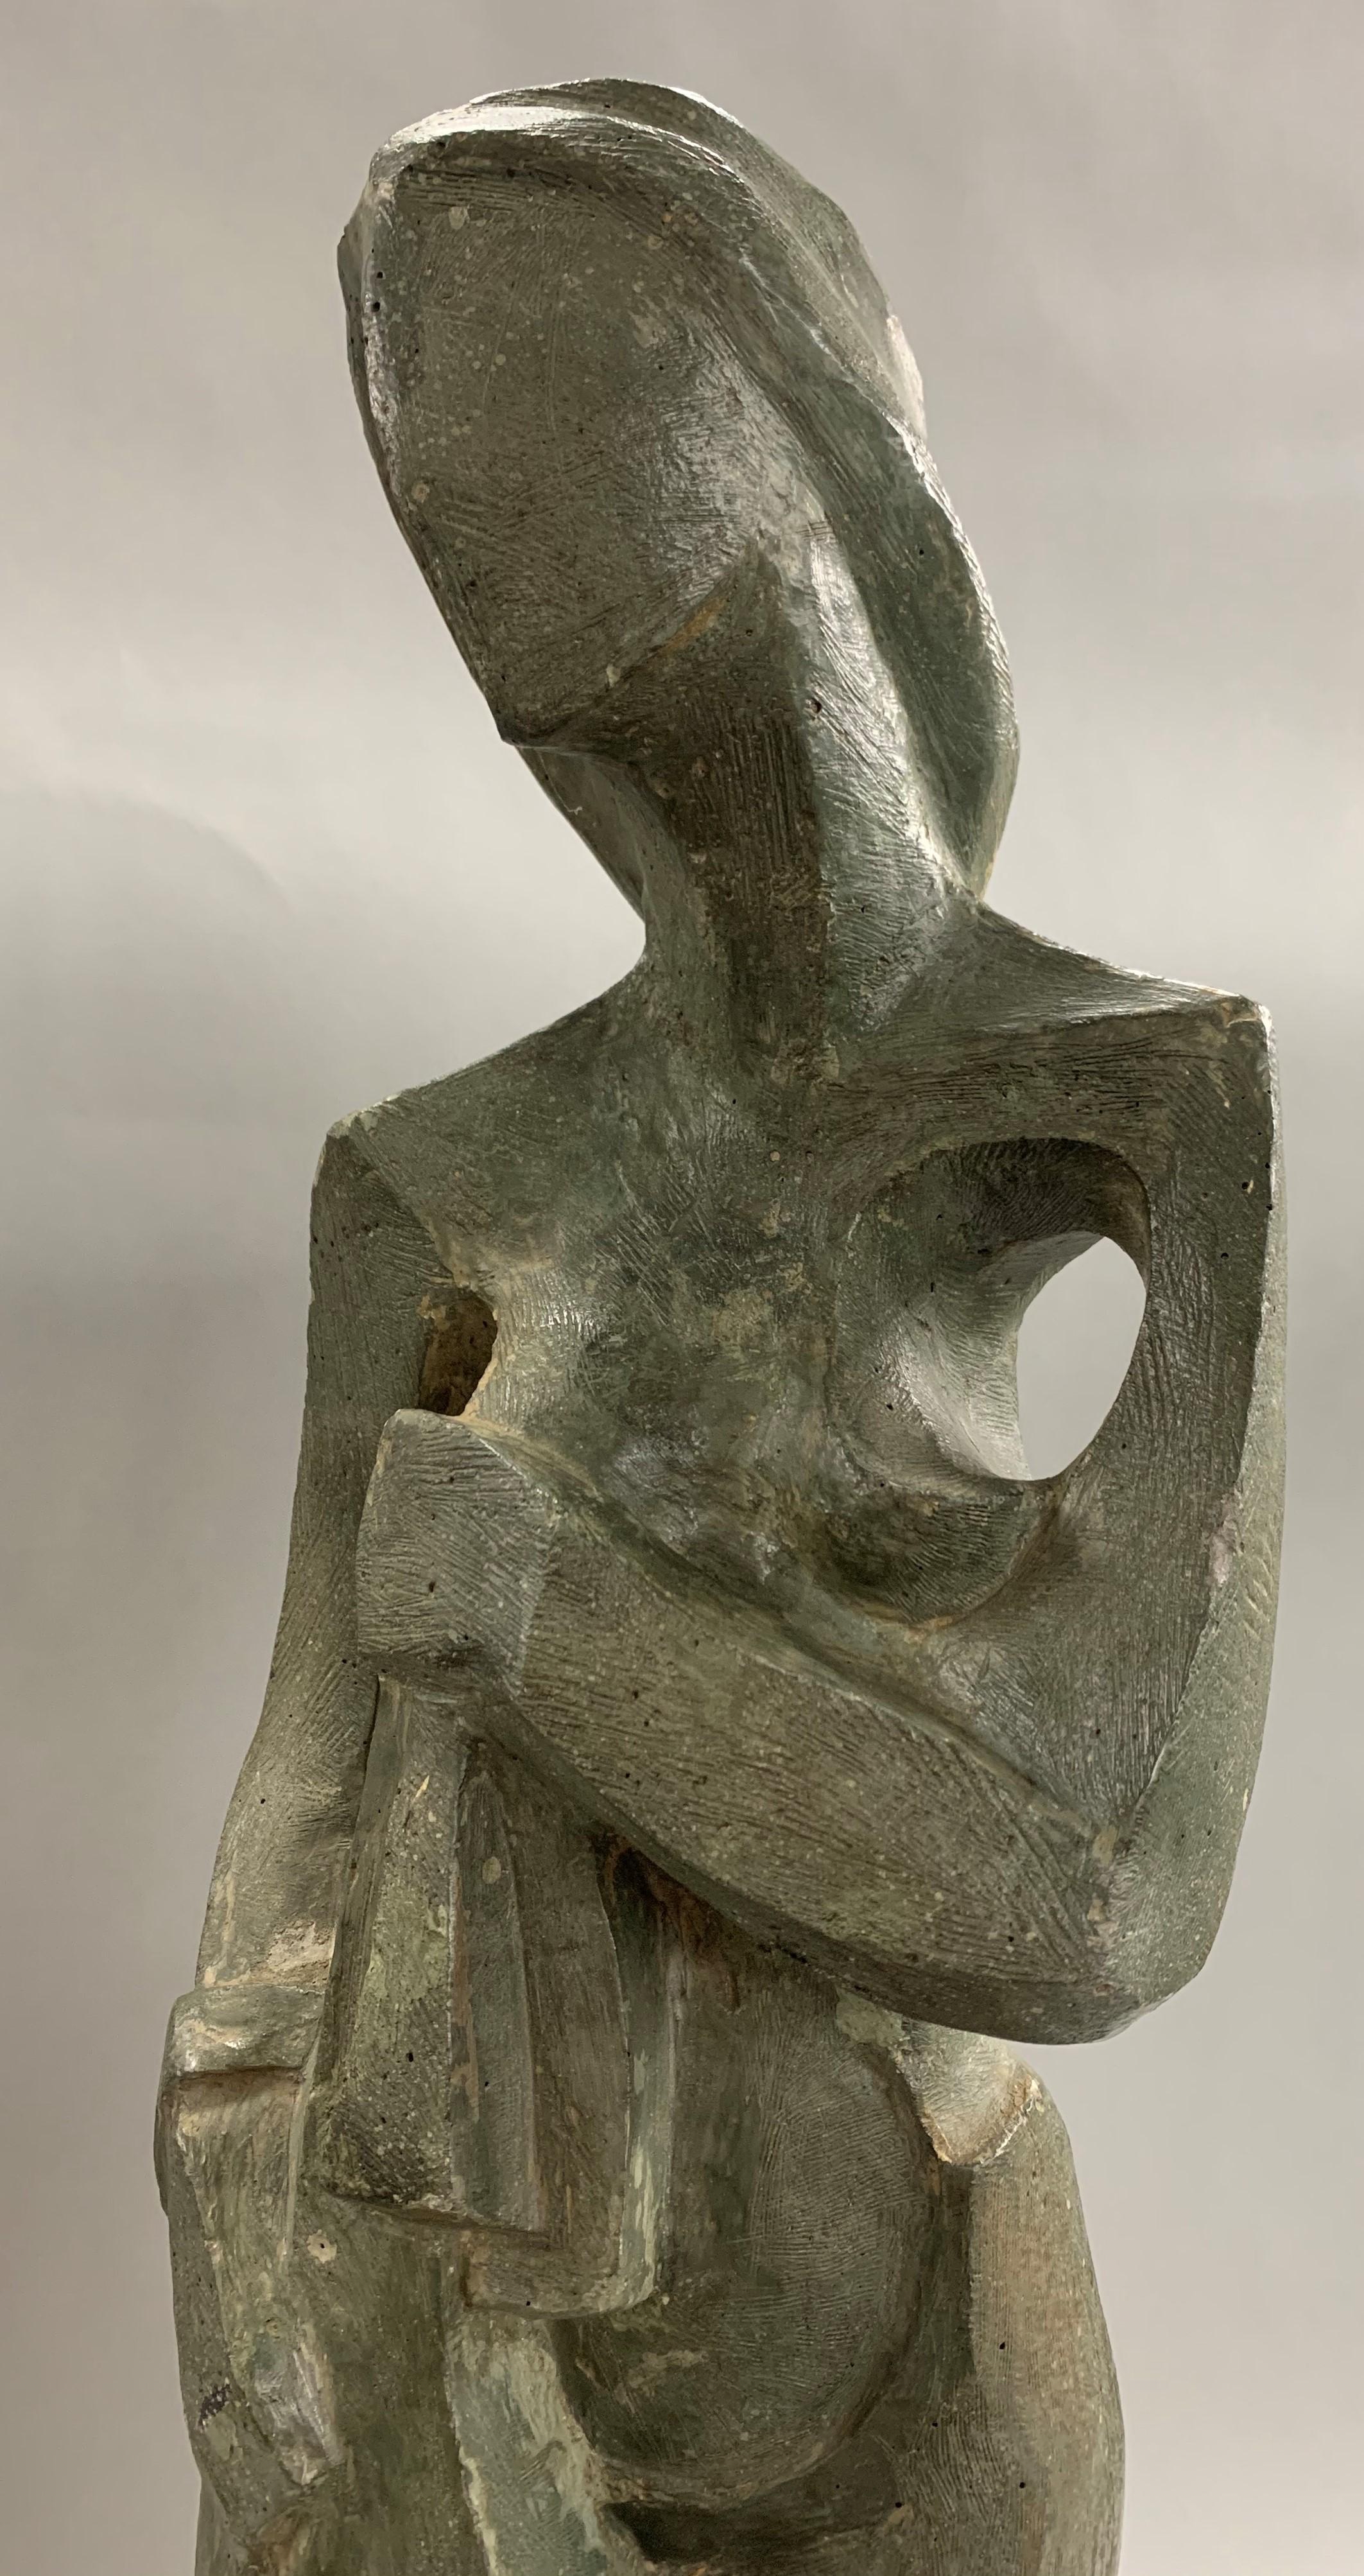 Woman Walking - Brown Abstract Sculpture by Robert Hughes